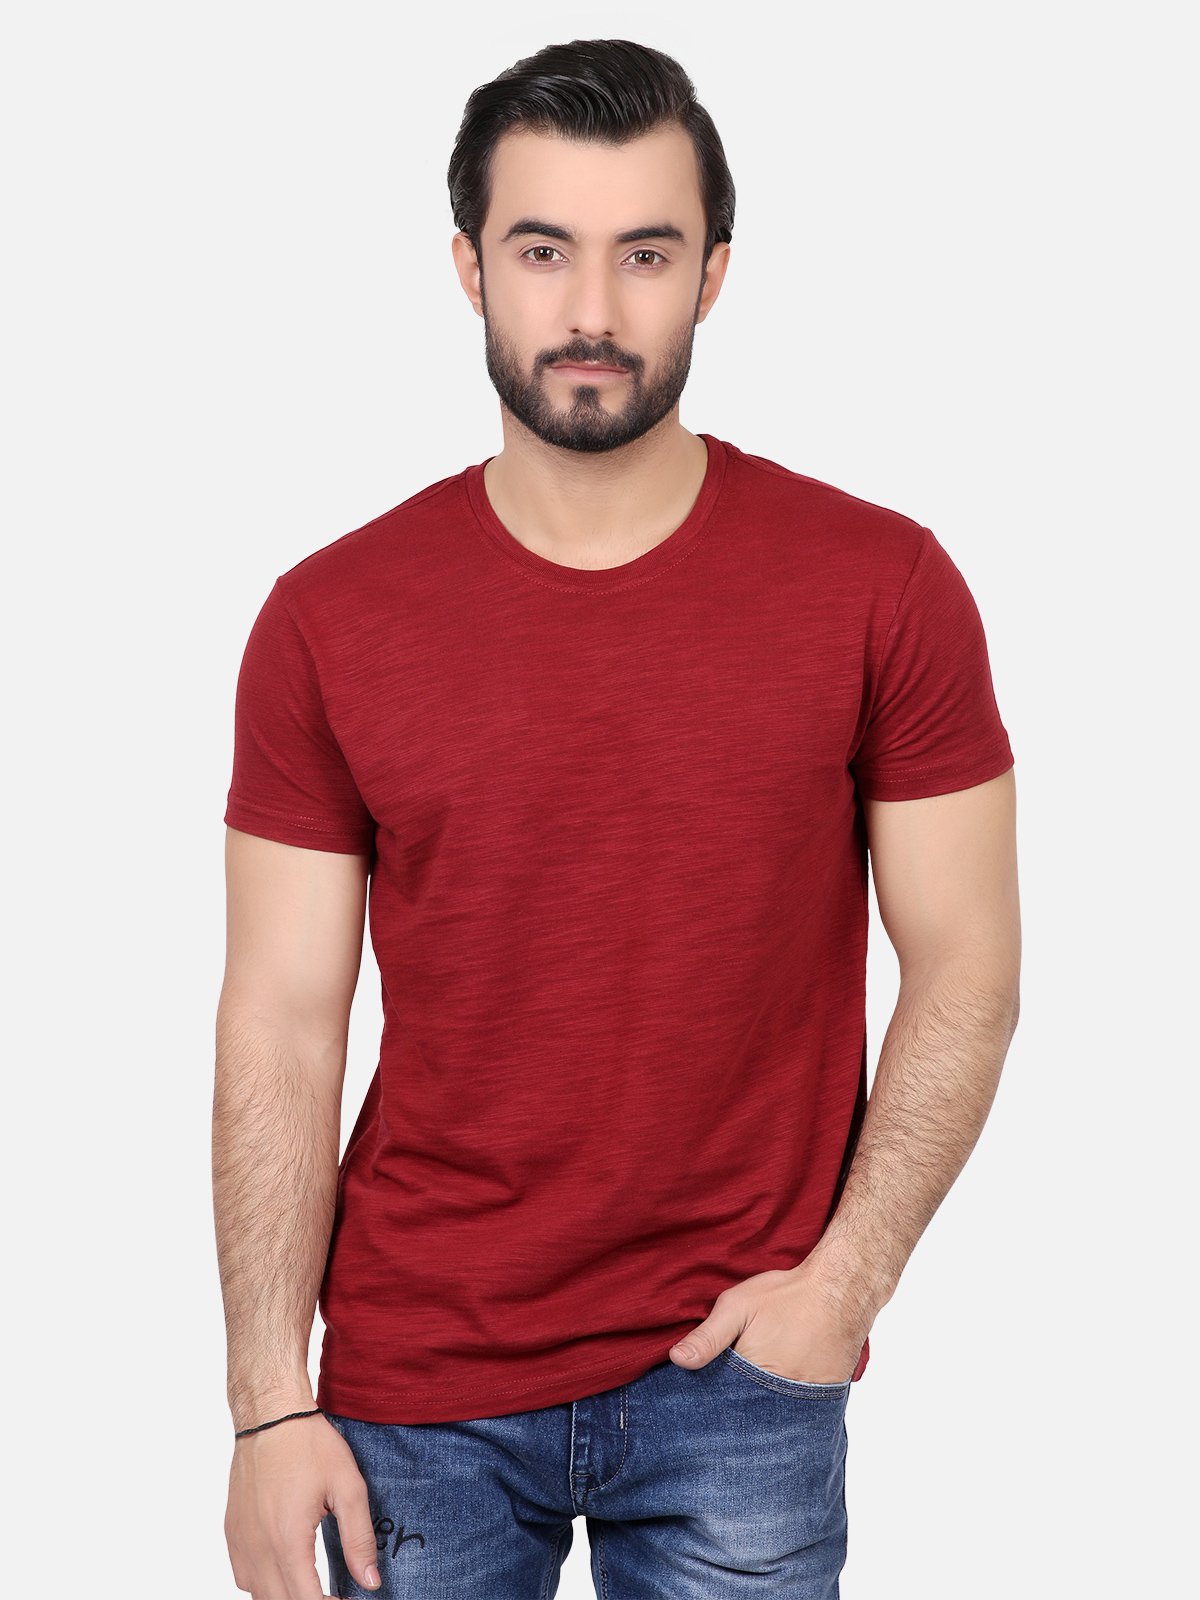 Men's Maroon Basic T-Shirt - FMTBT19-035